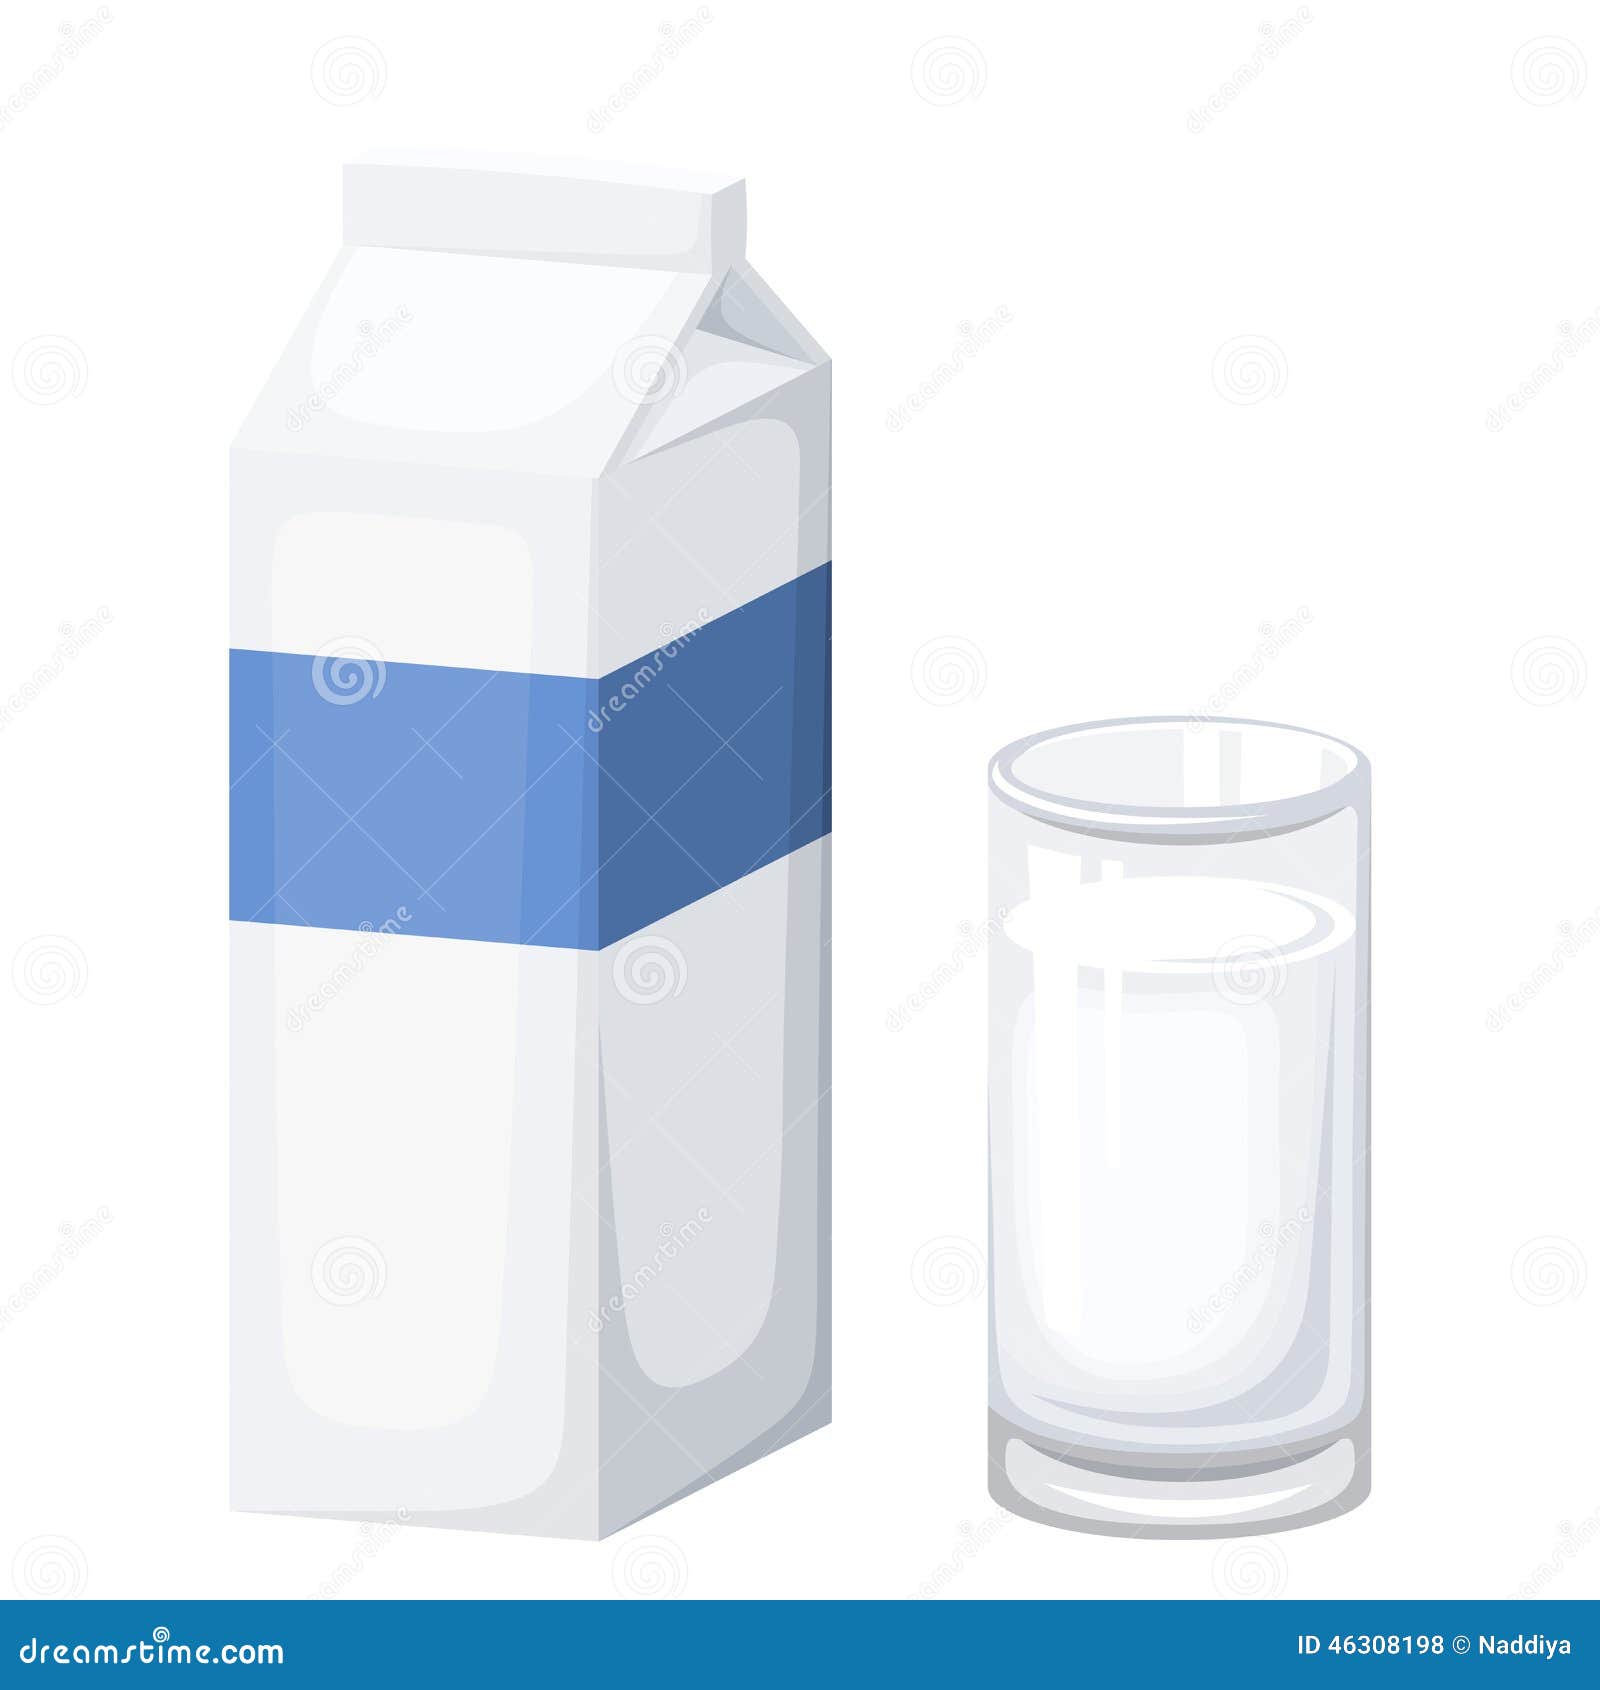 clipart glass of milk - photo #25